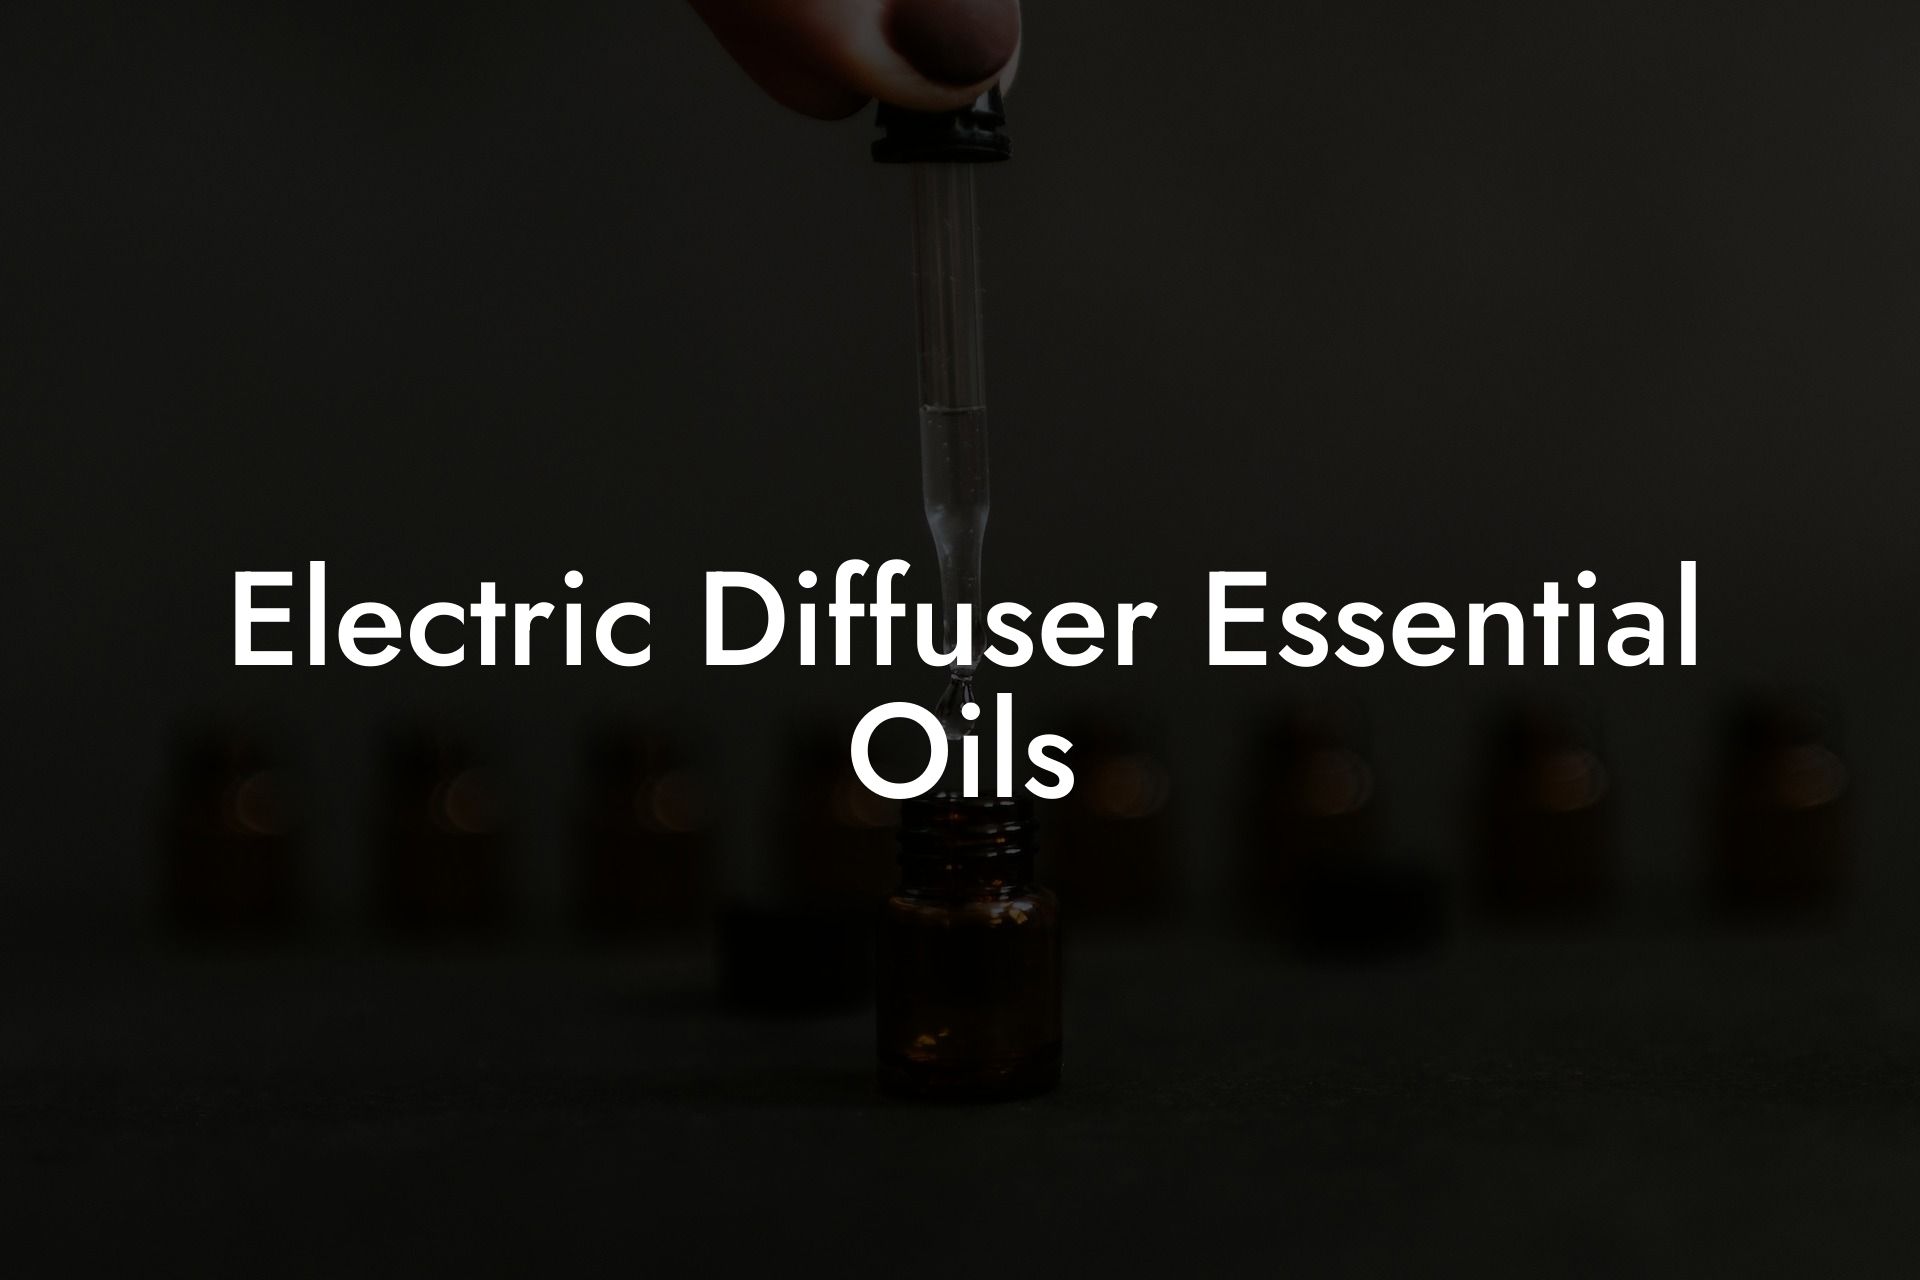 Electric Diffuser Essential Oils